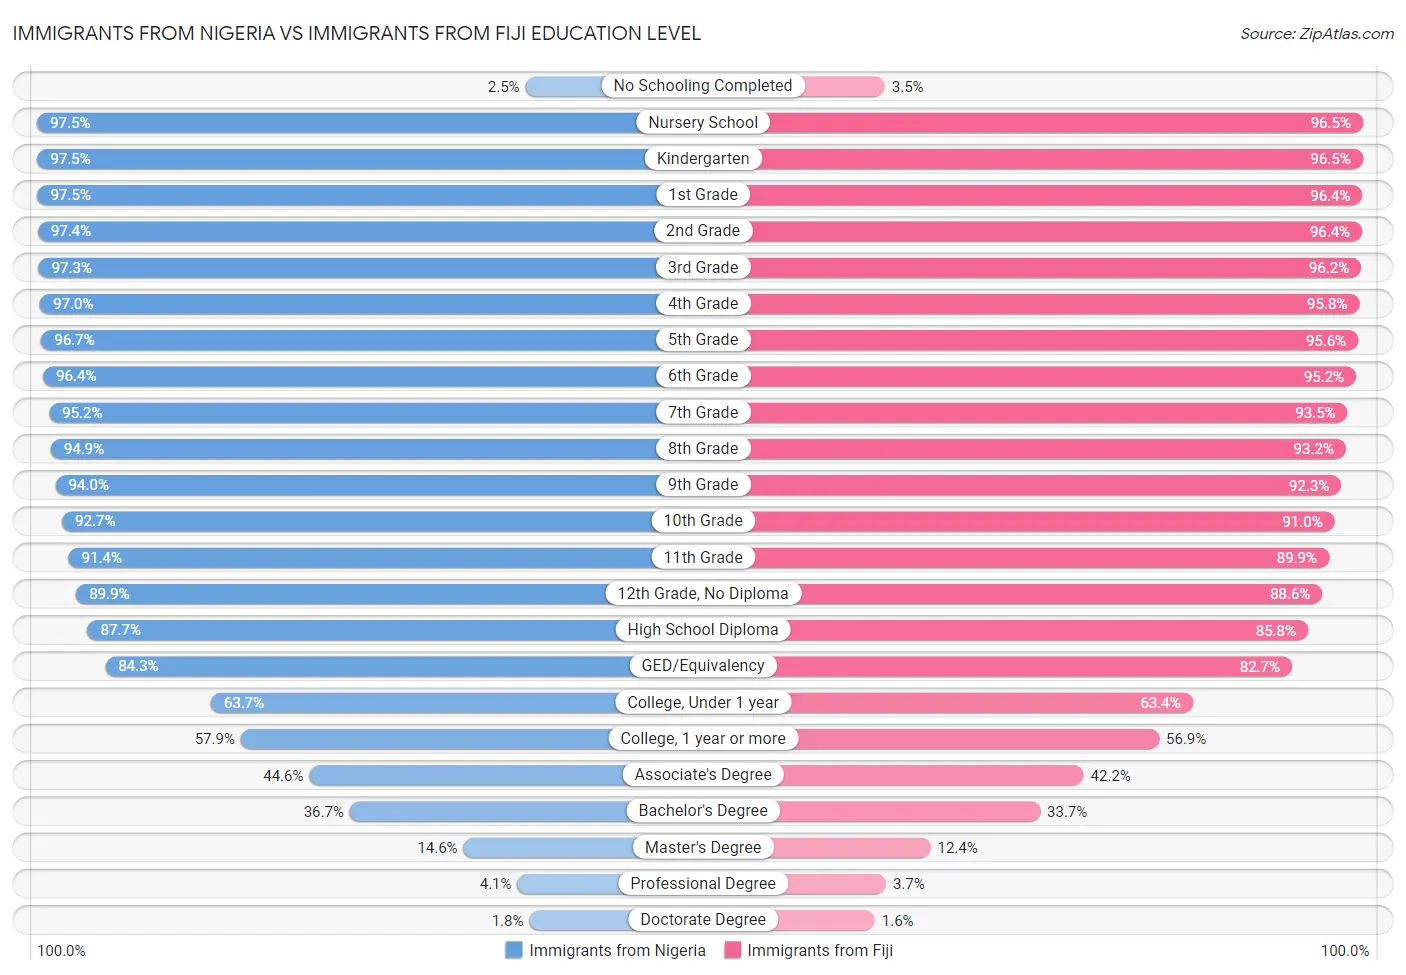 Immigrants from Nigeria vs Immigrants from Fiji Education Level